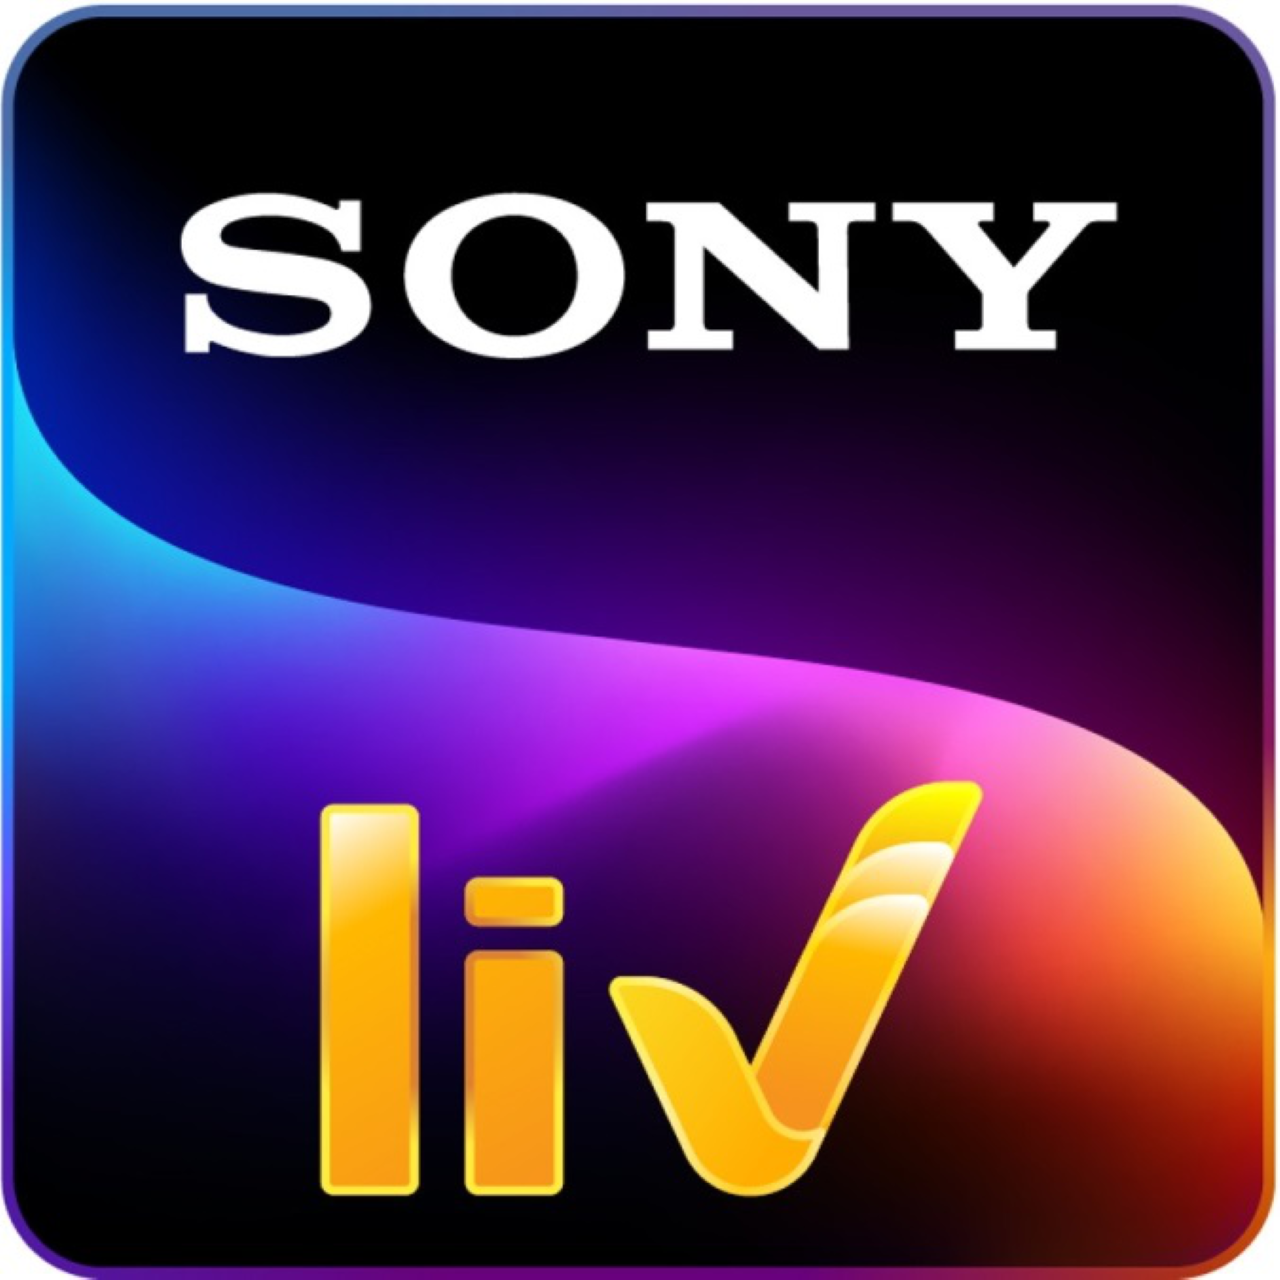 Sony Liv - network